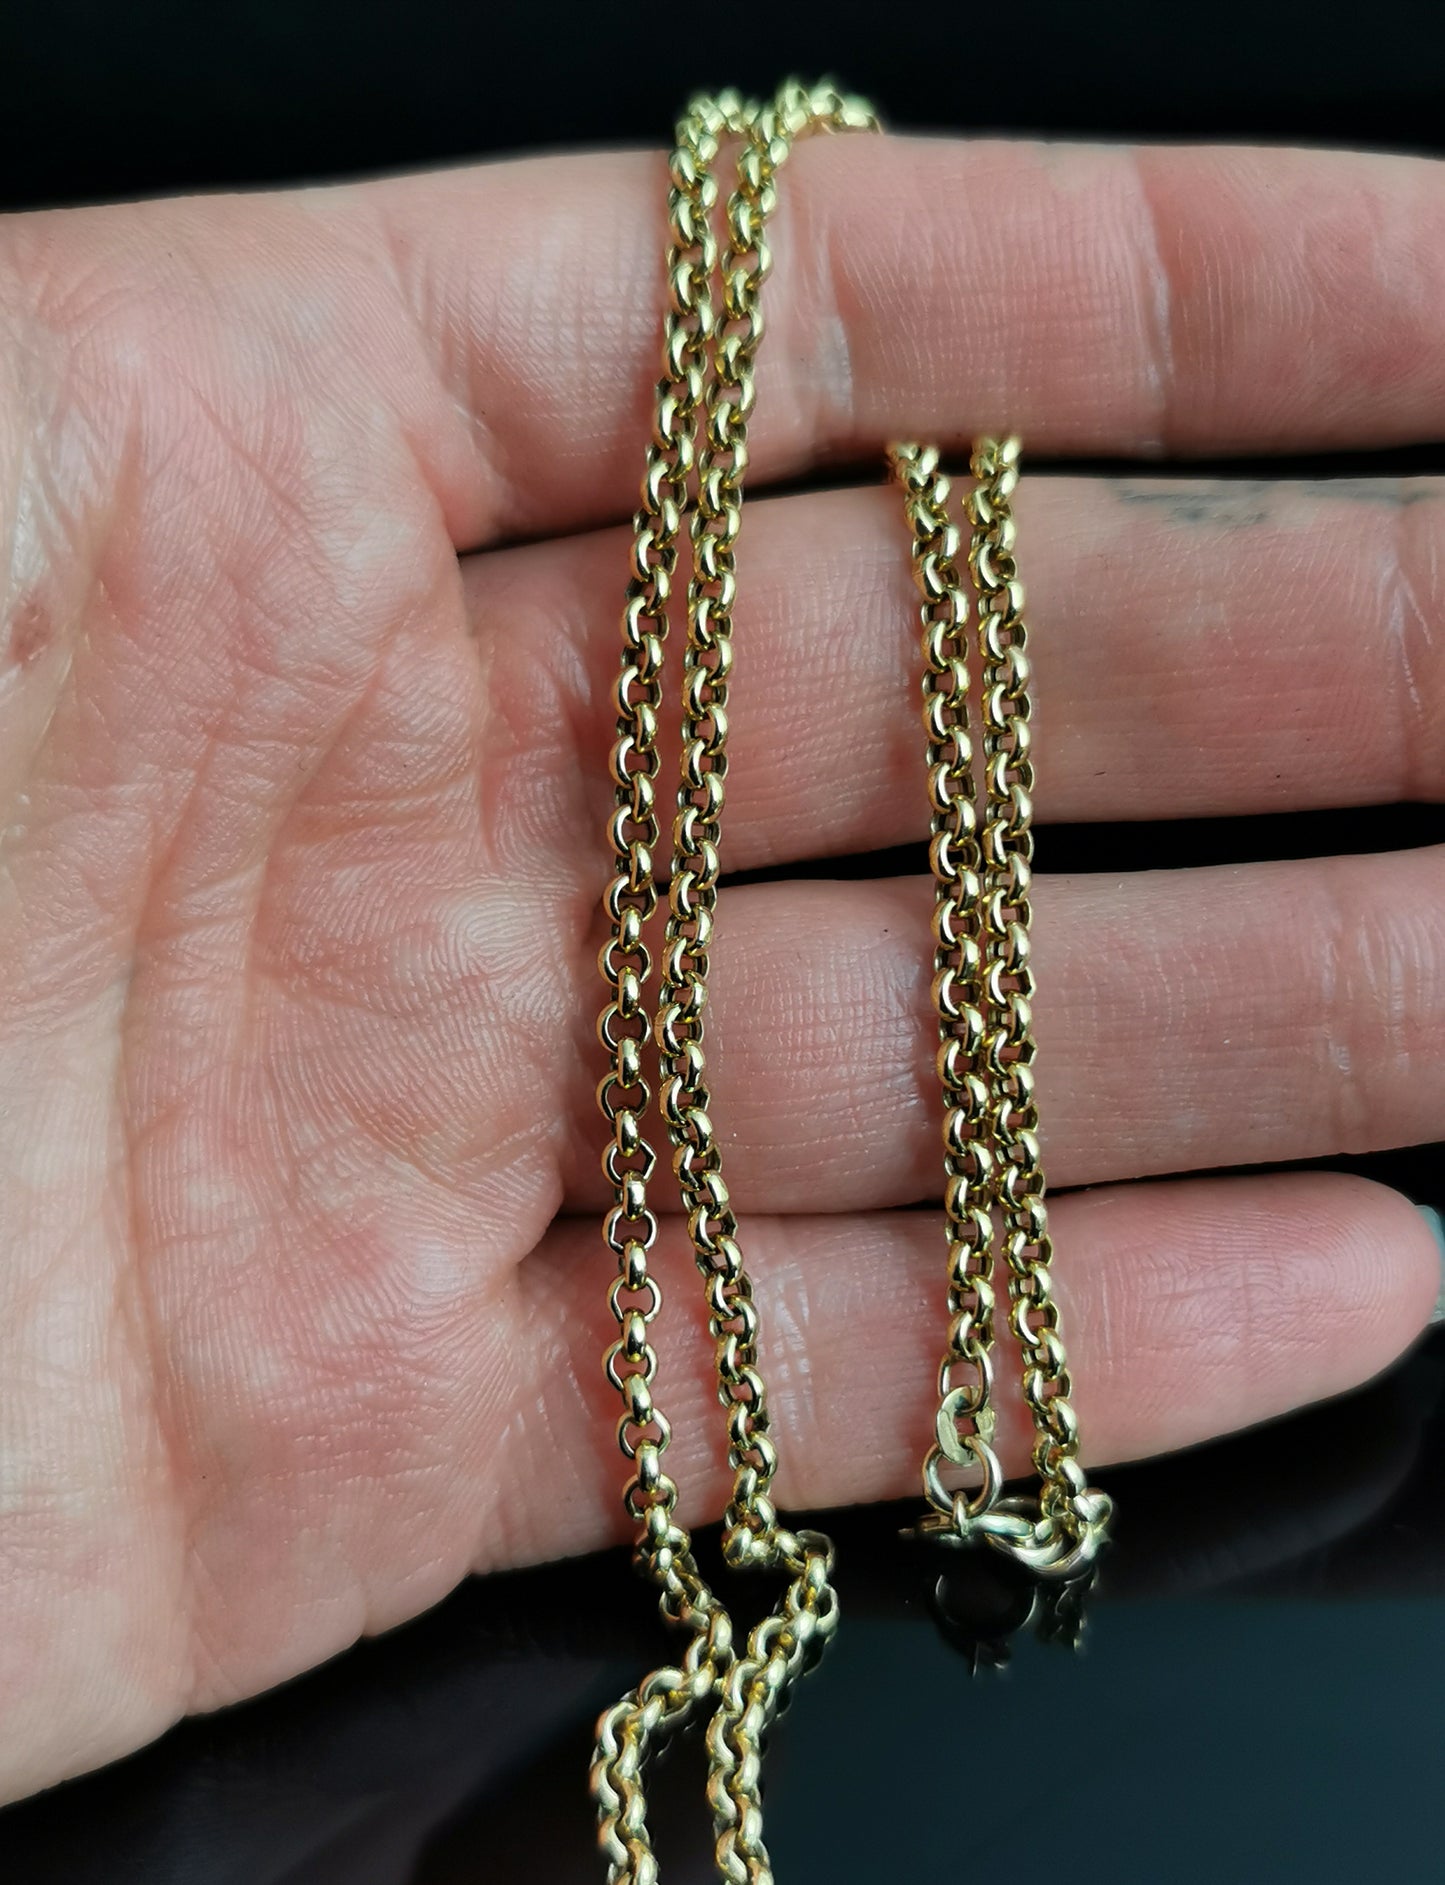 Vintage 9ct gold Belcher link chain necklace, rolo link